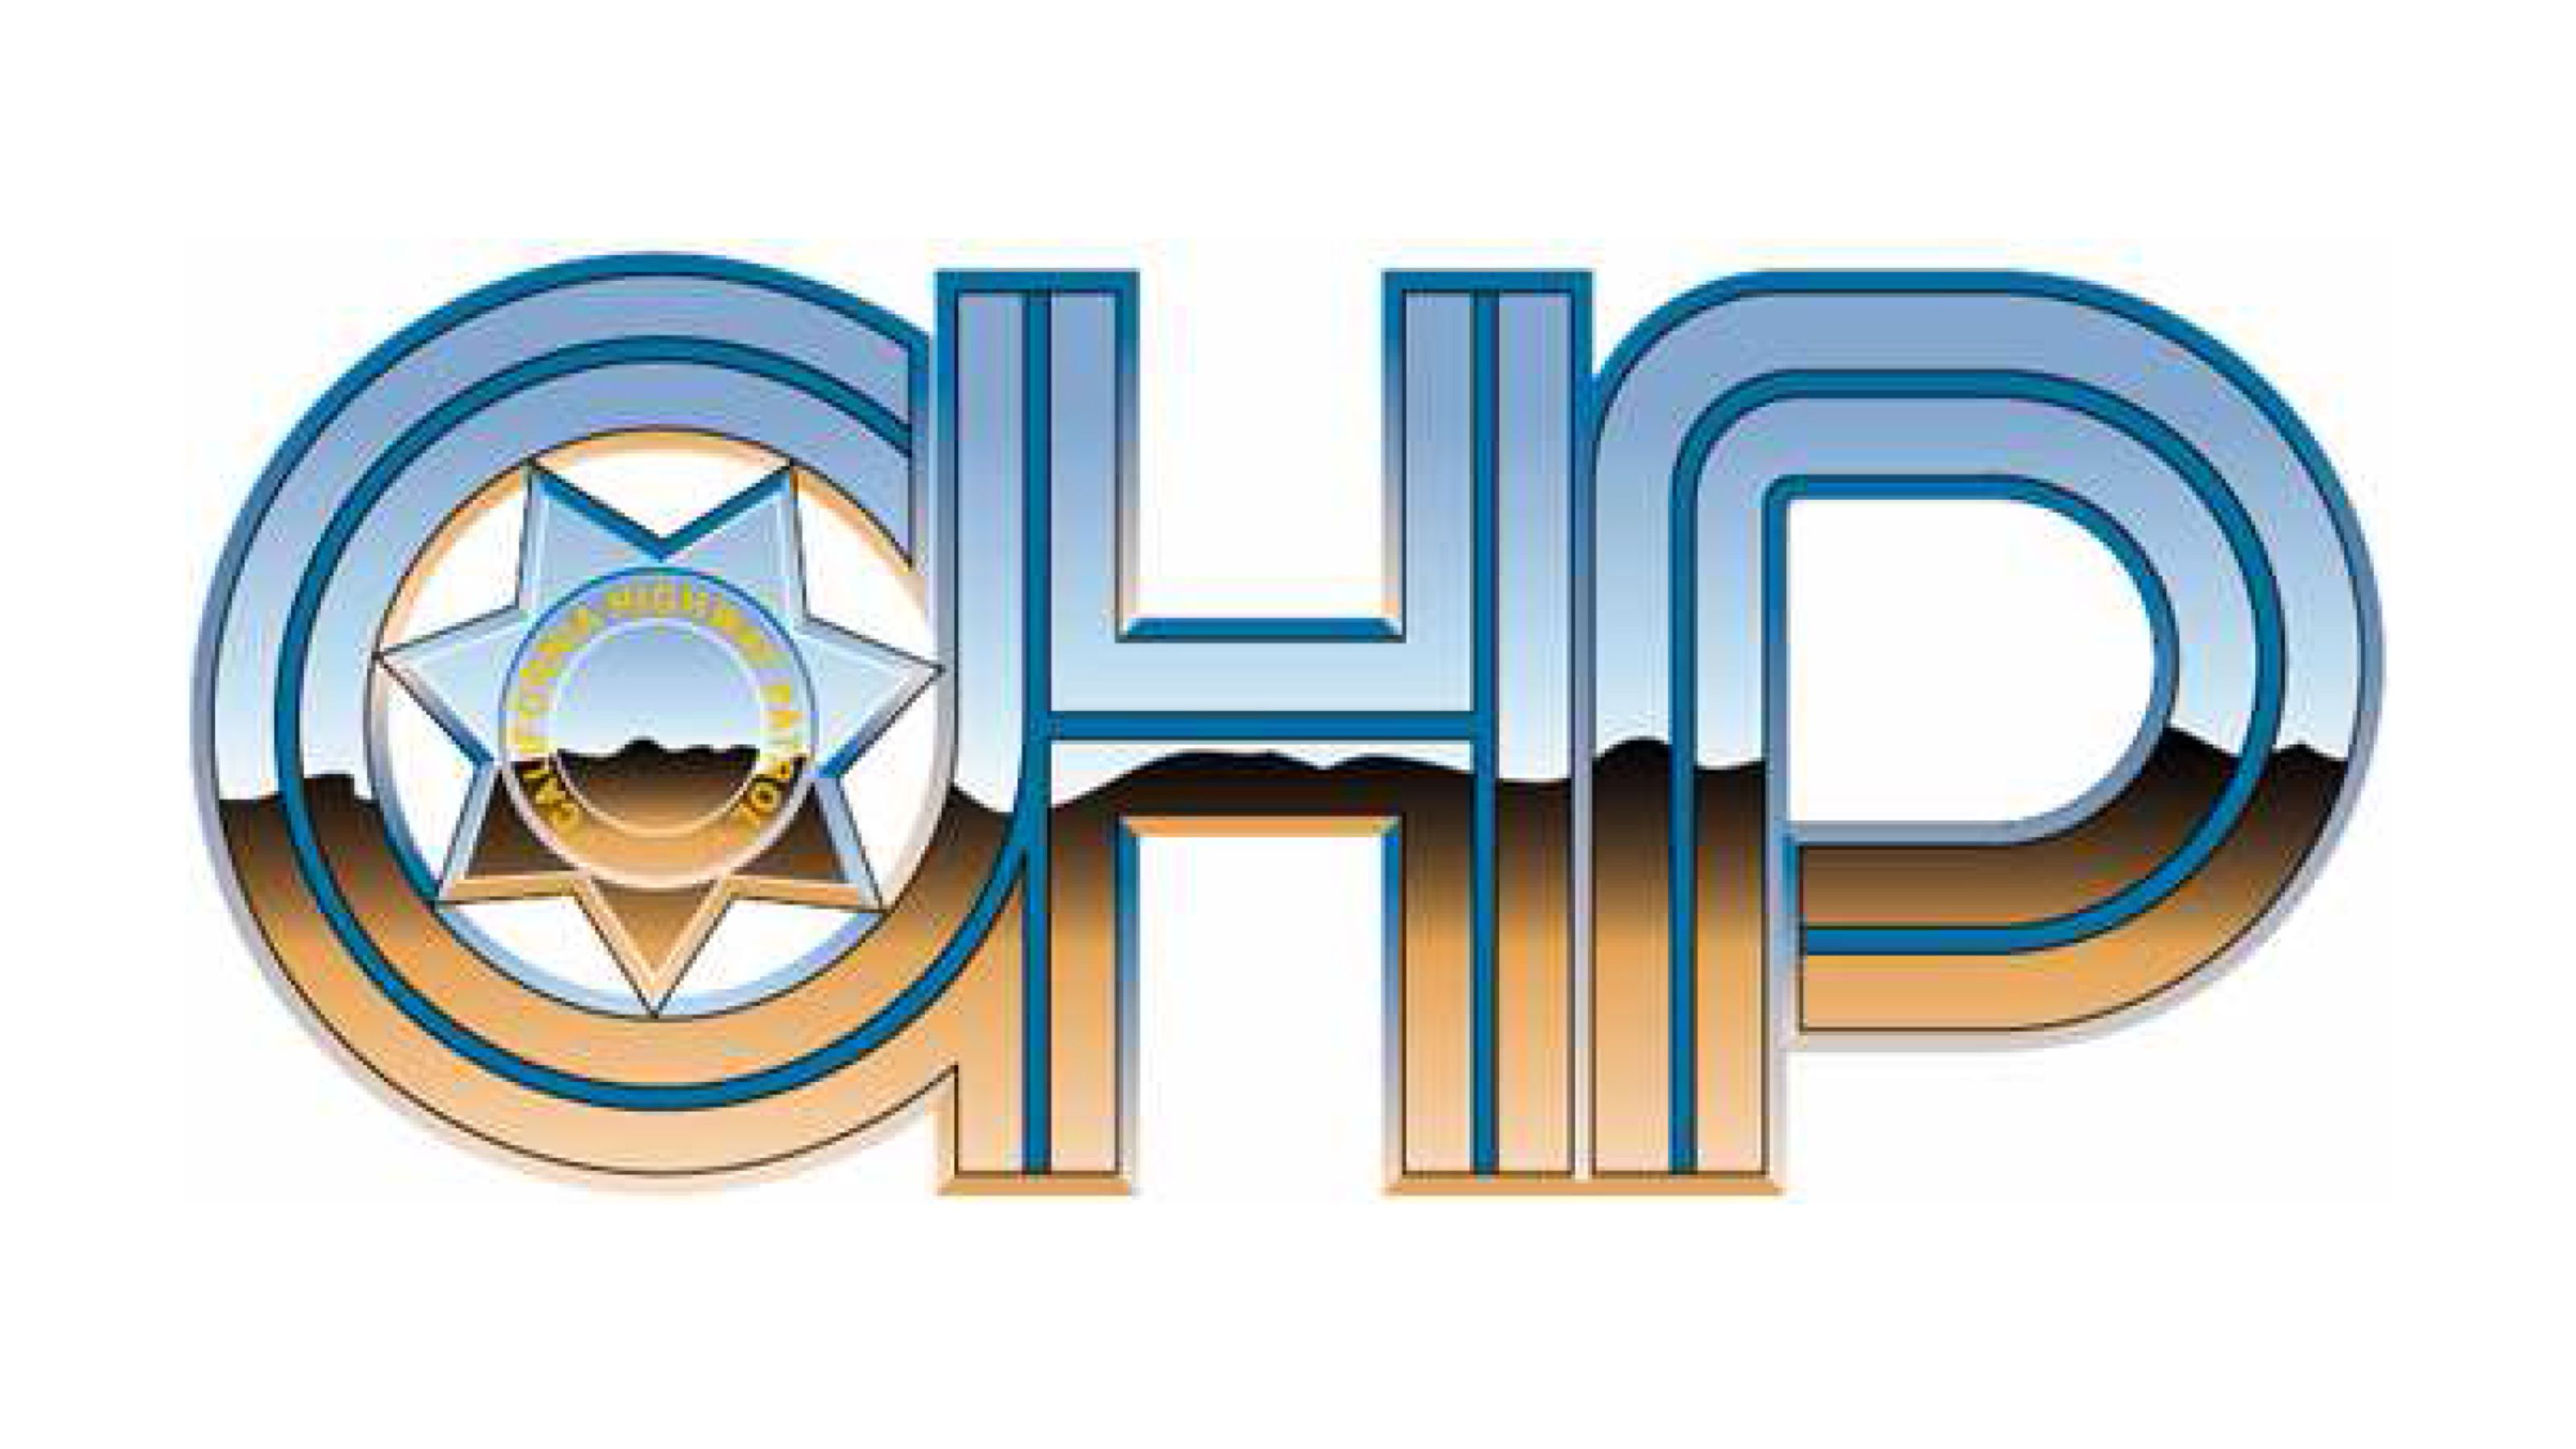 chp logo 2